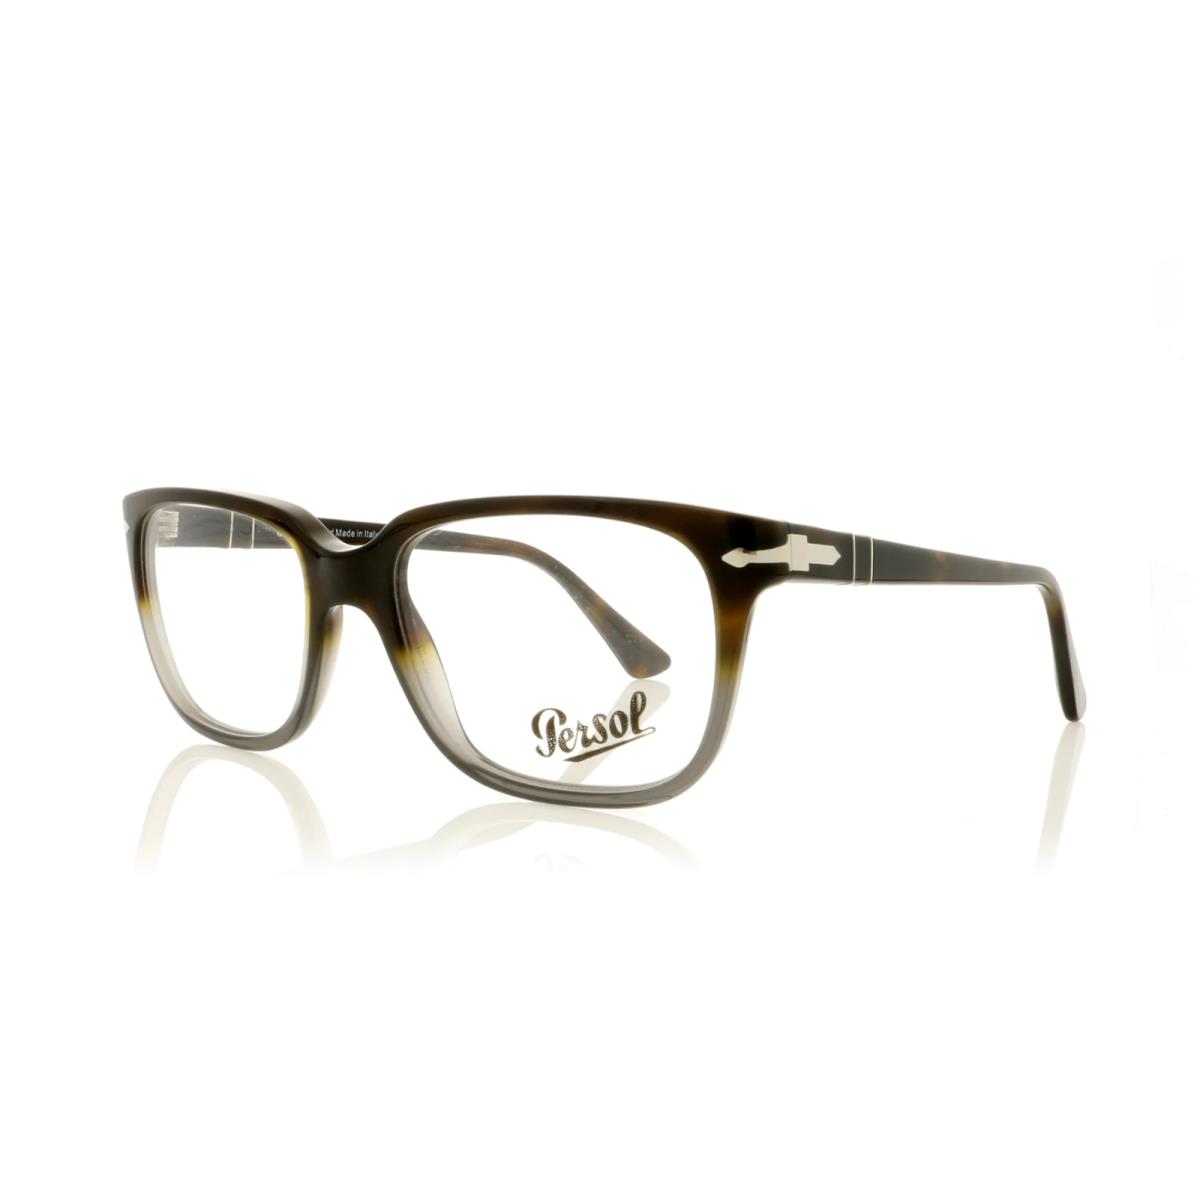 Persol Eyeglasses PO3094-V 9028 Havana Gray Frames 53MM ST Rx-able